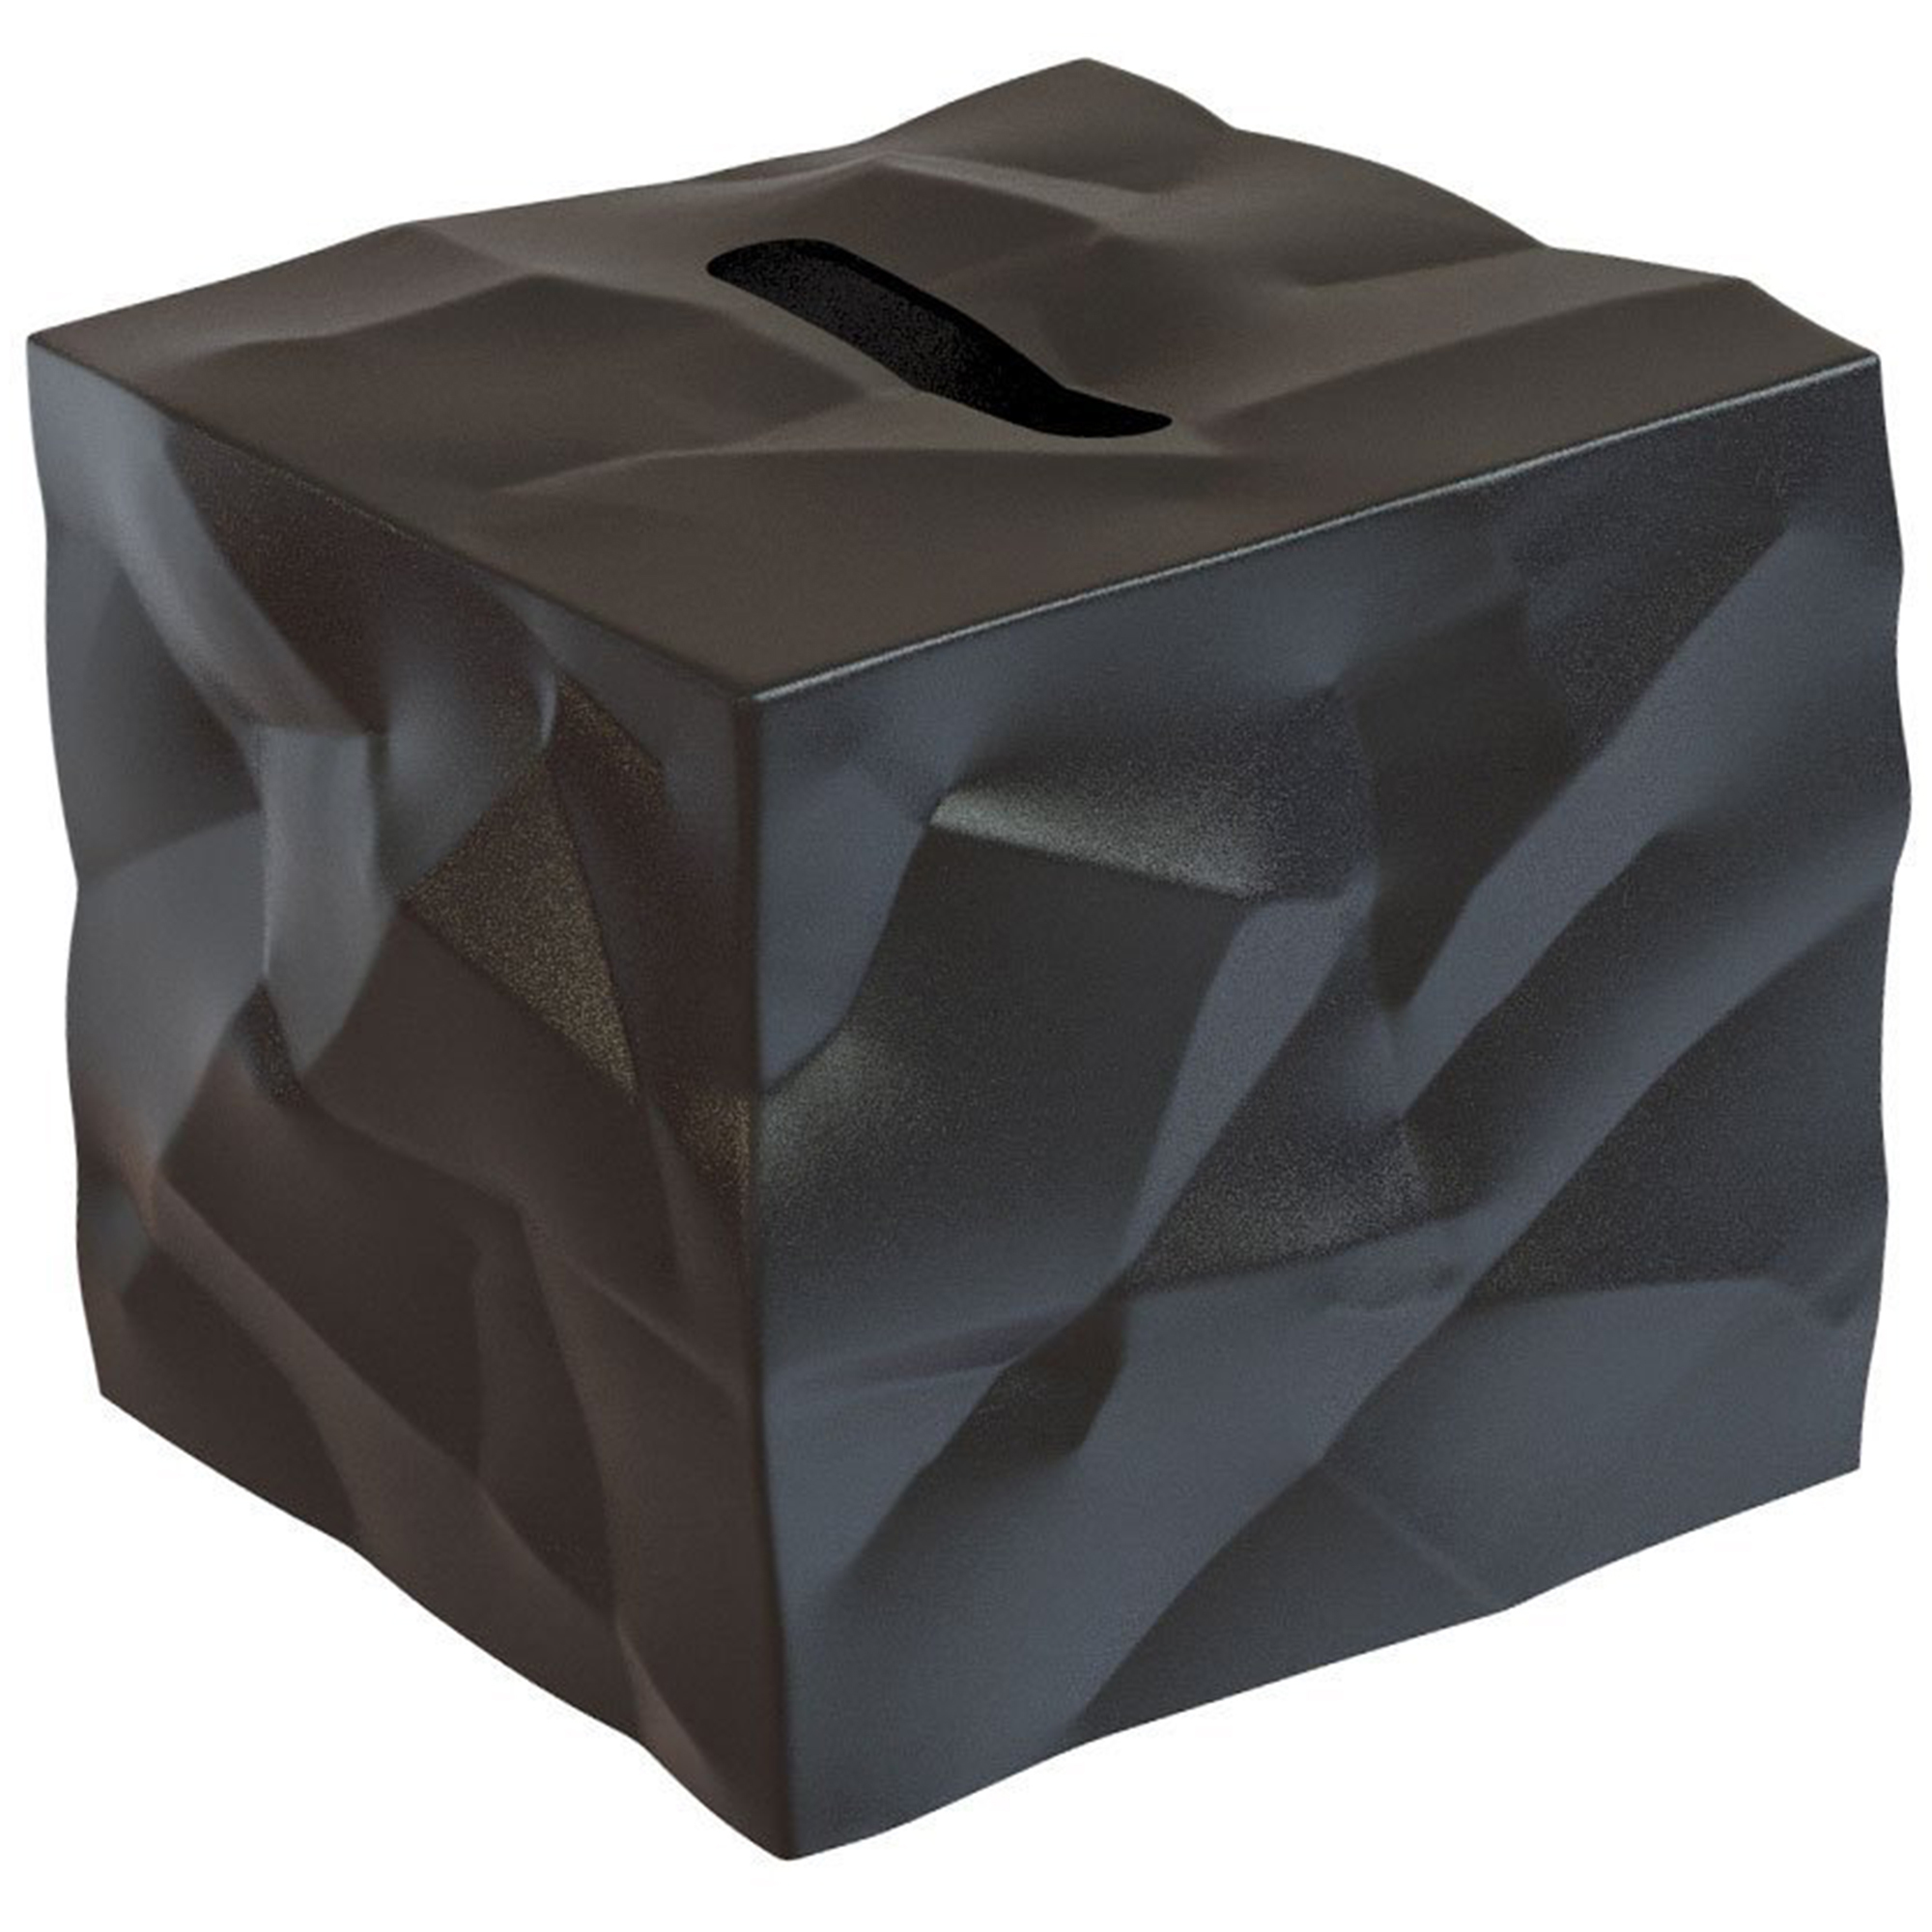 the tissue box